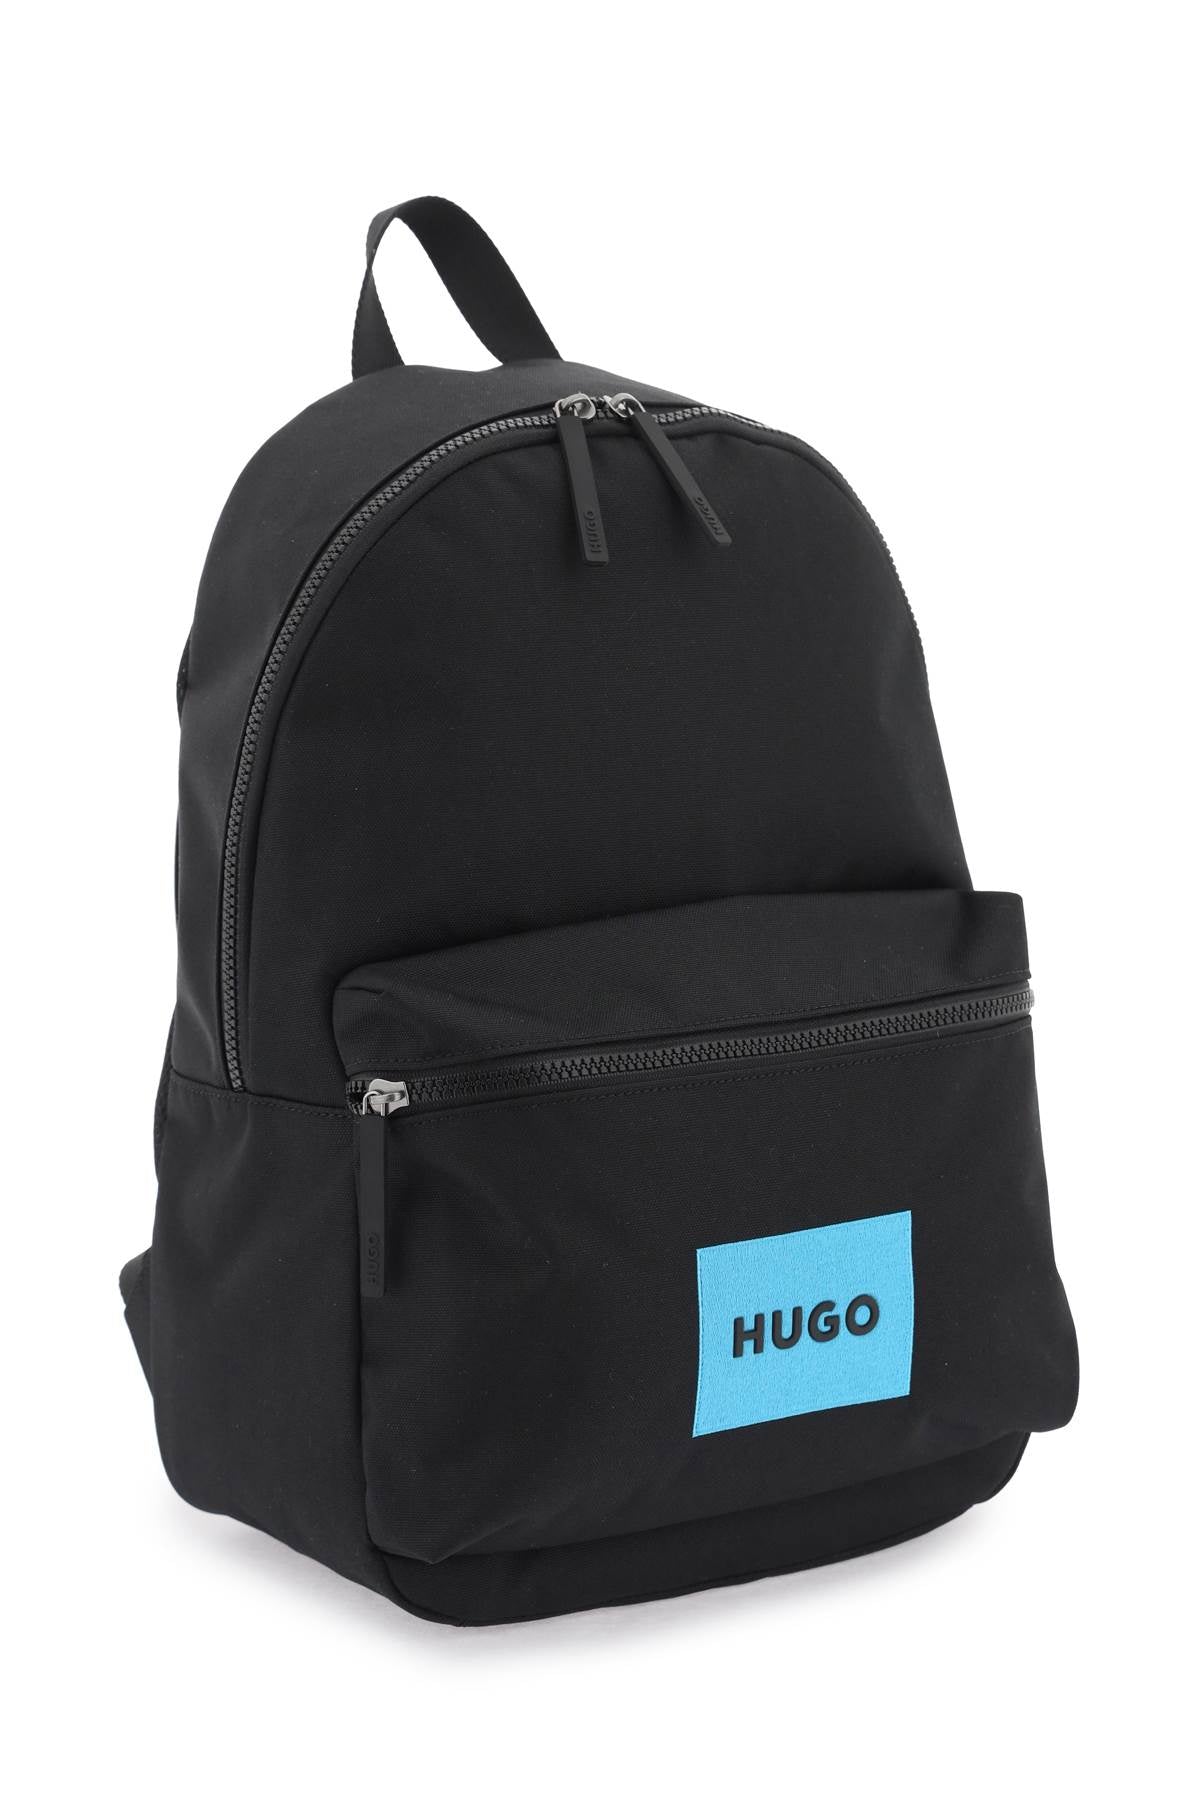 Hugo recycled nylon backpack in-2